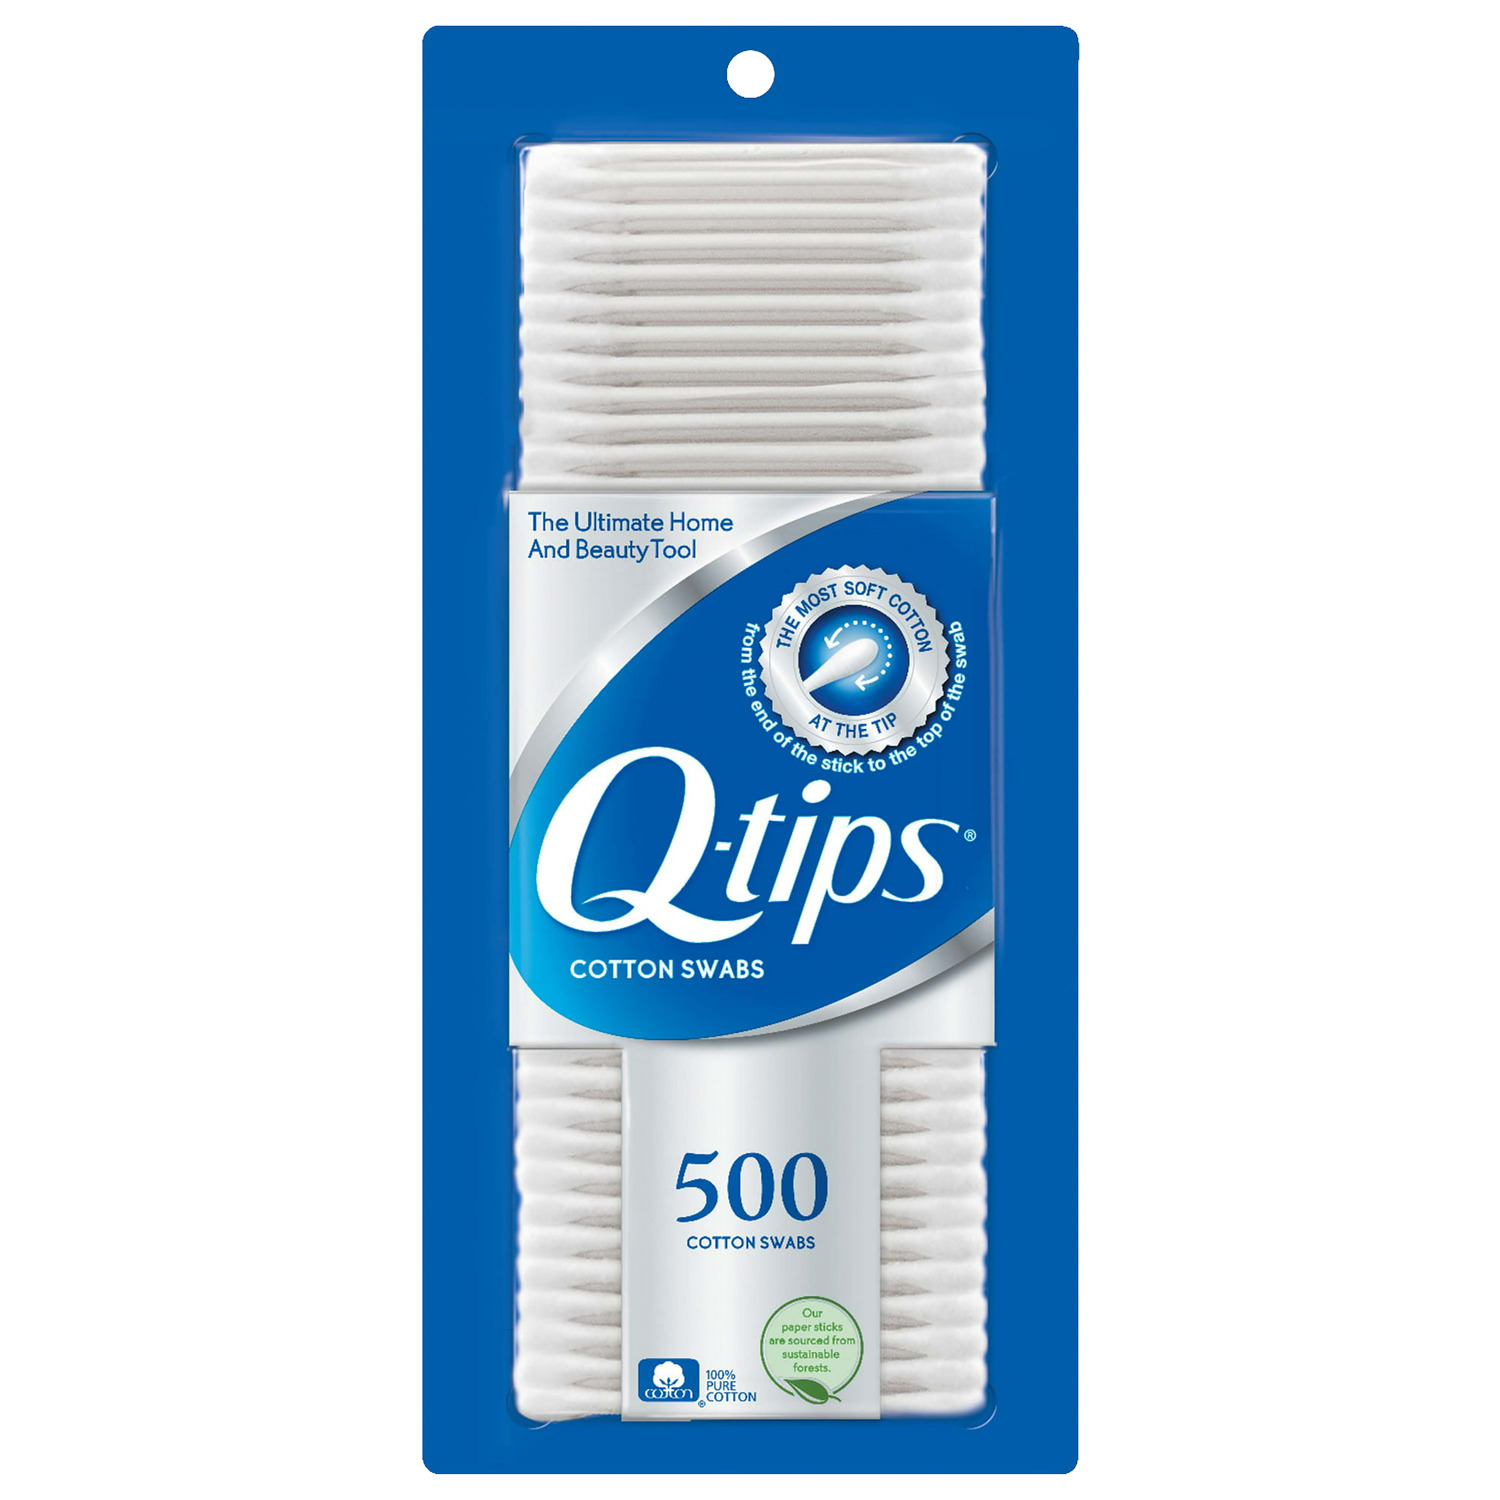 Q-tips - Cotton swabs, 500 count